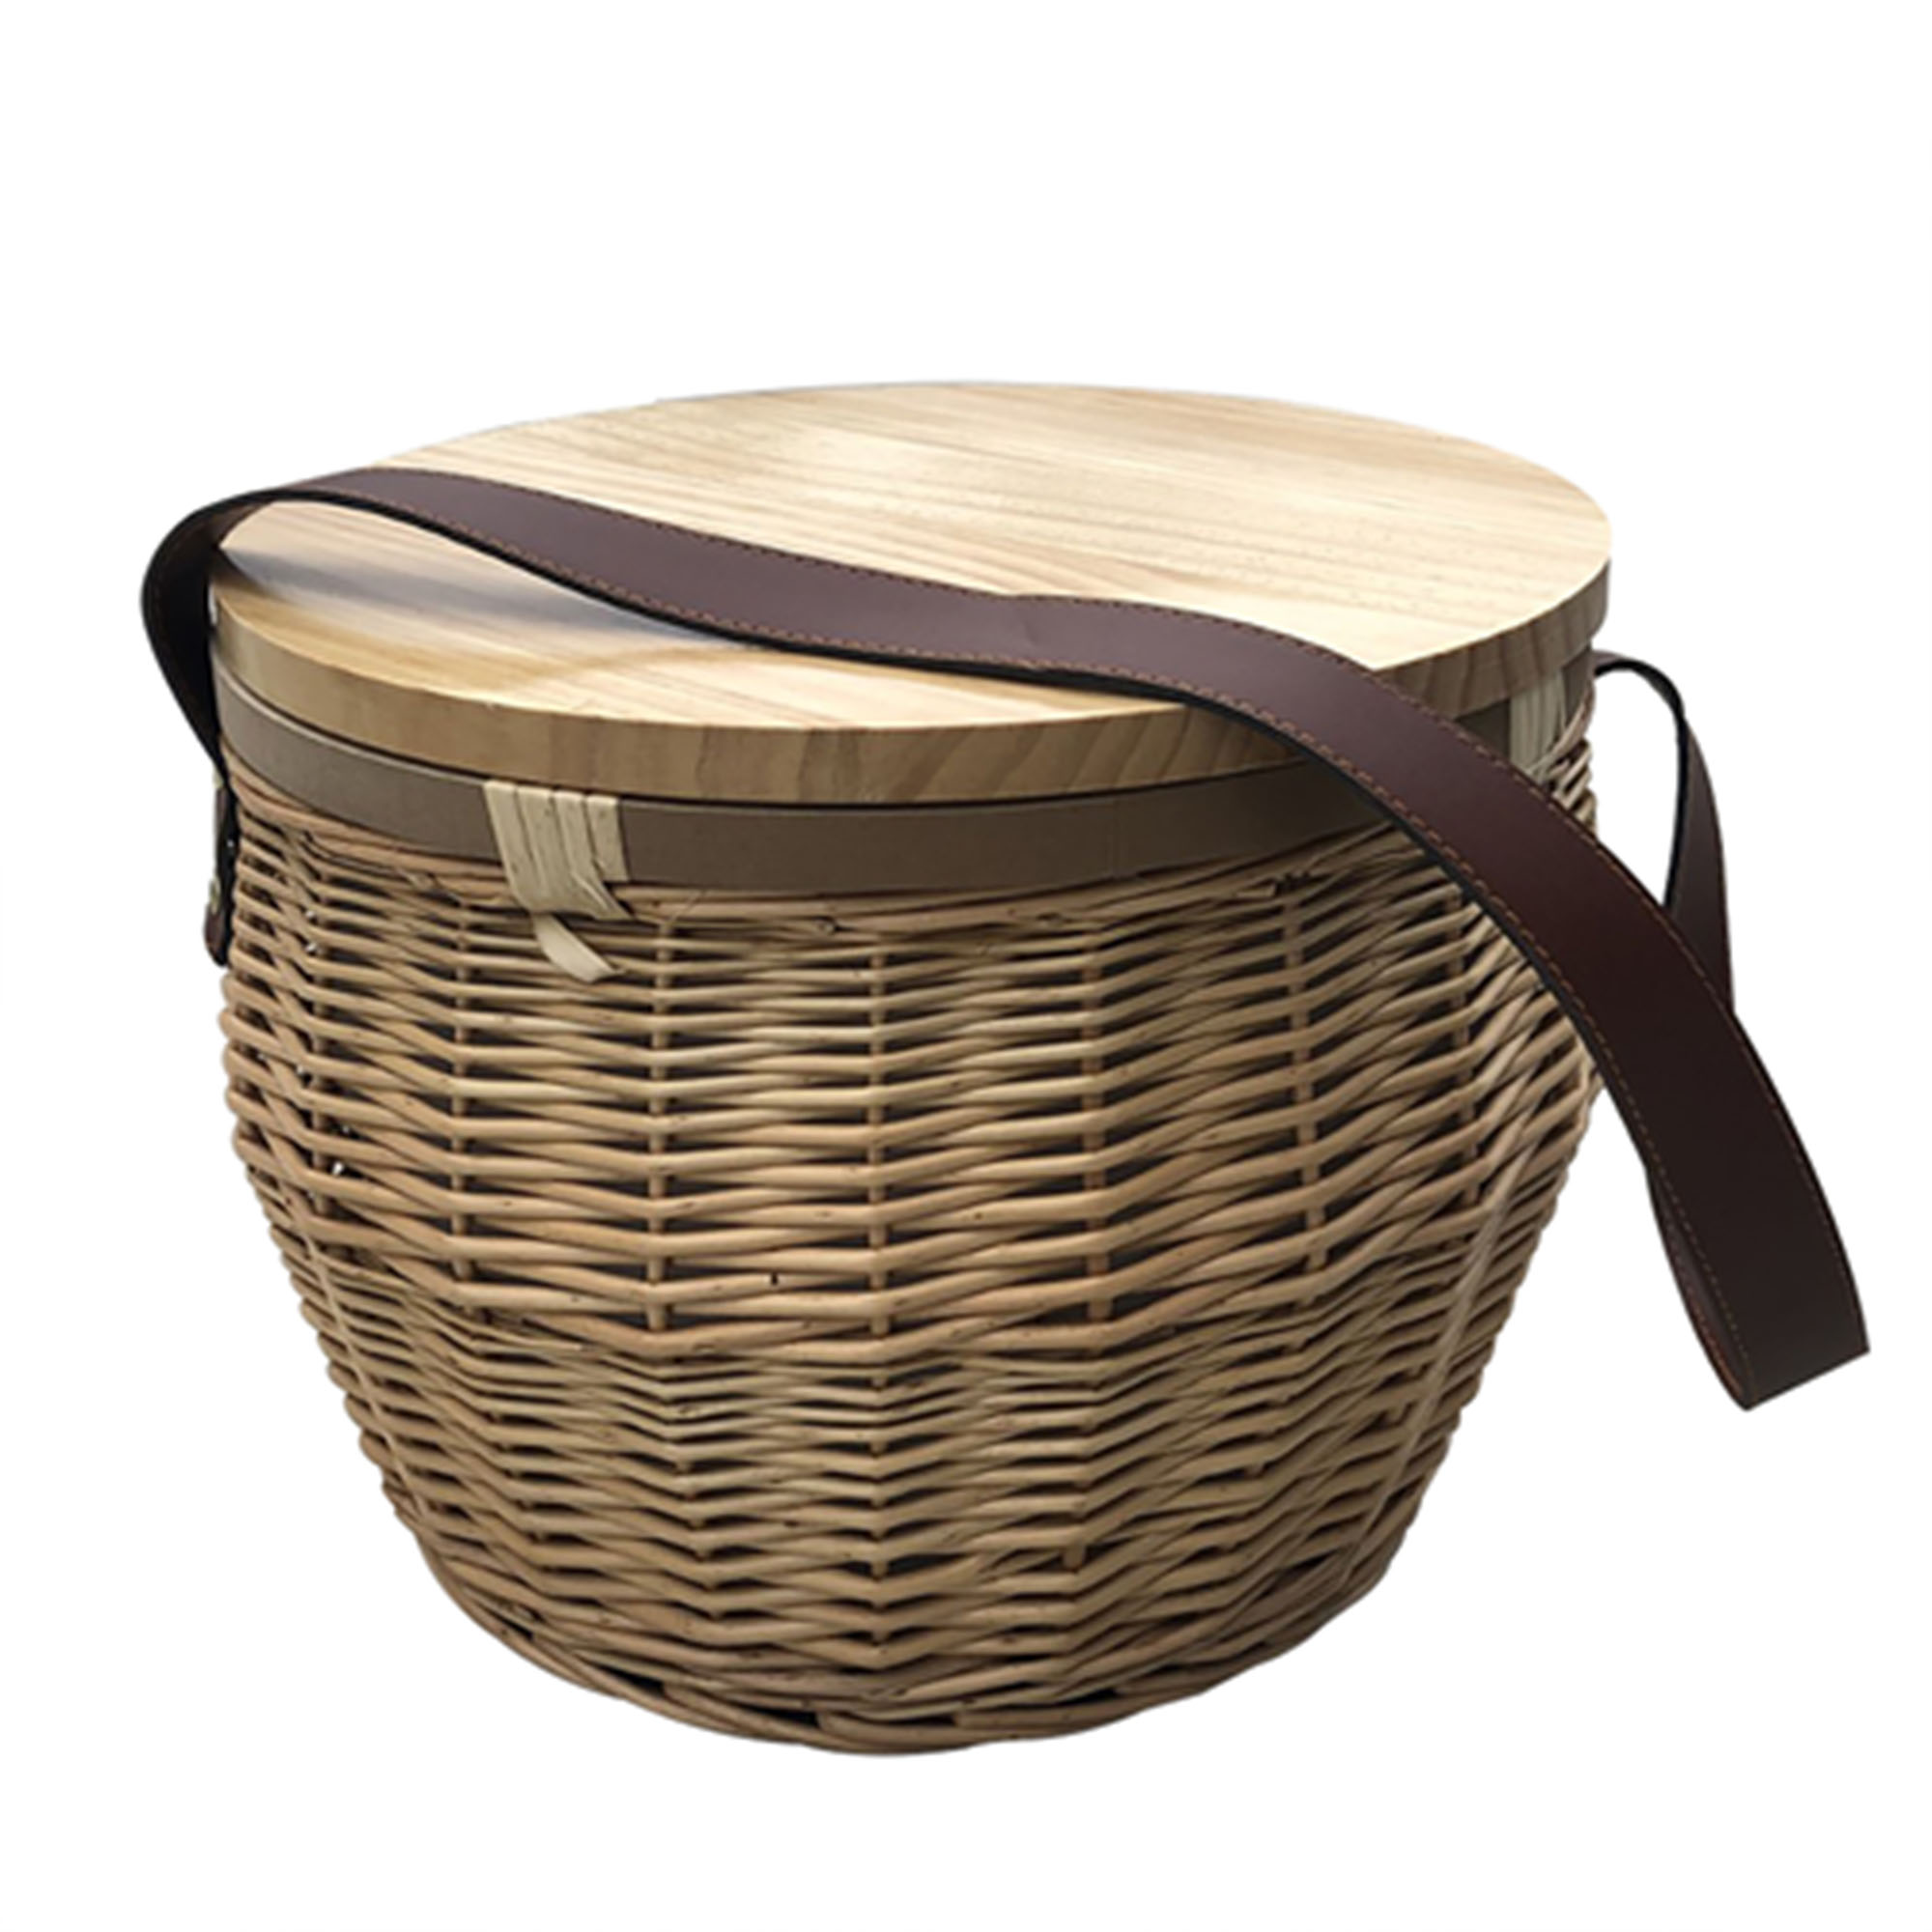 Scotch Wicker Picnic Cooler Basket(round)